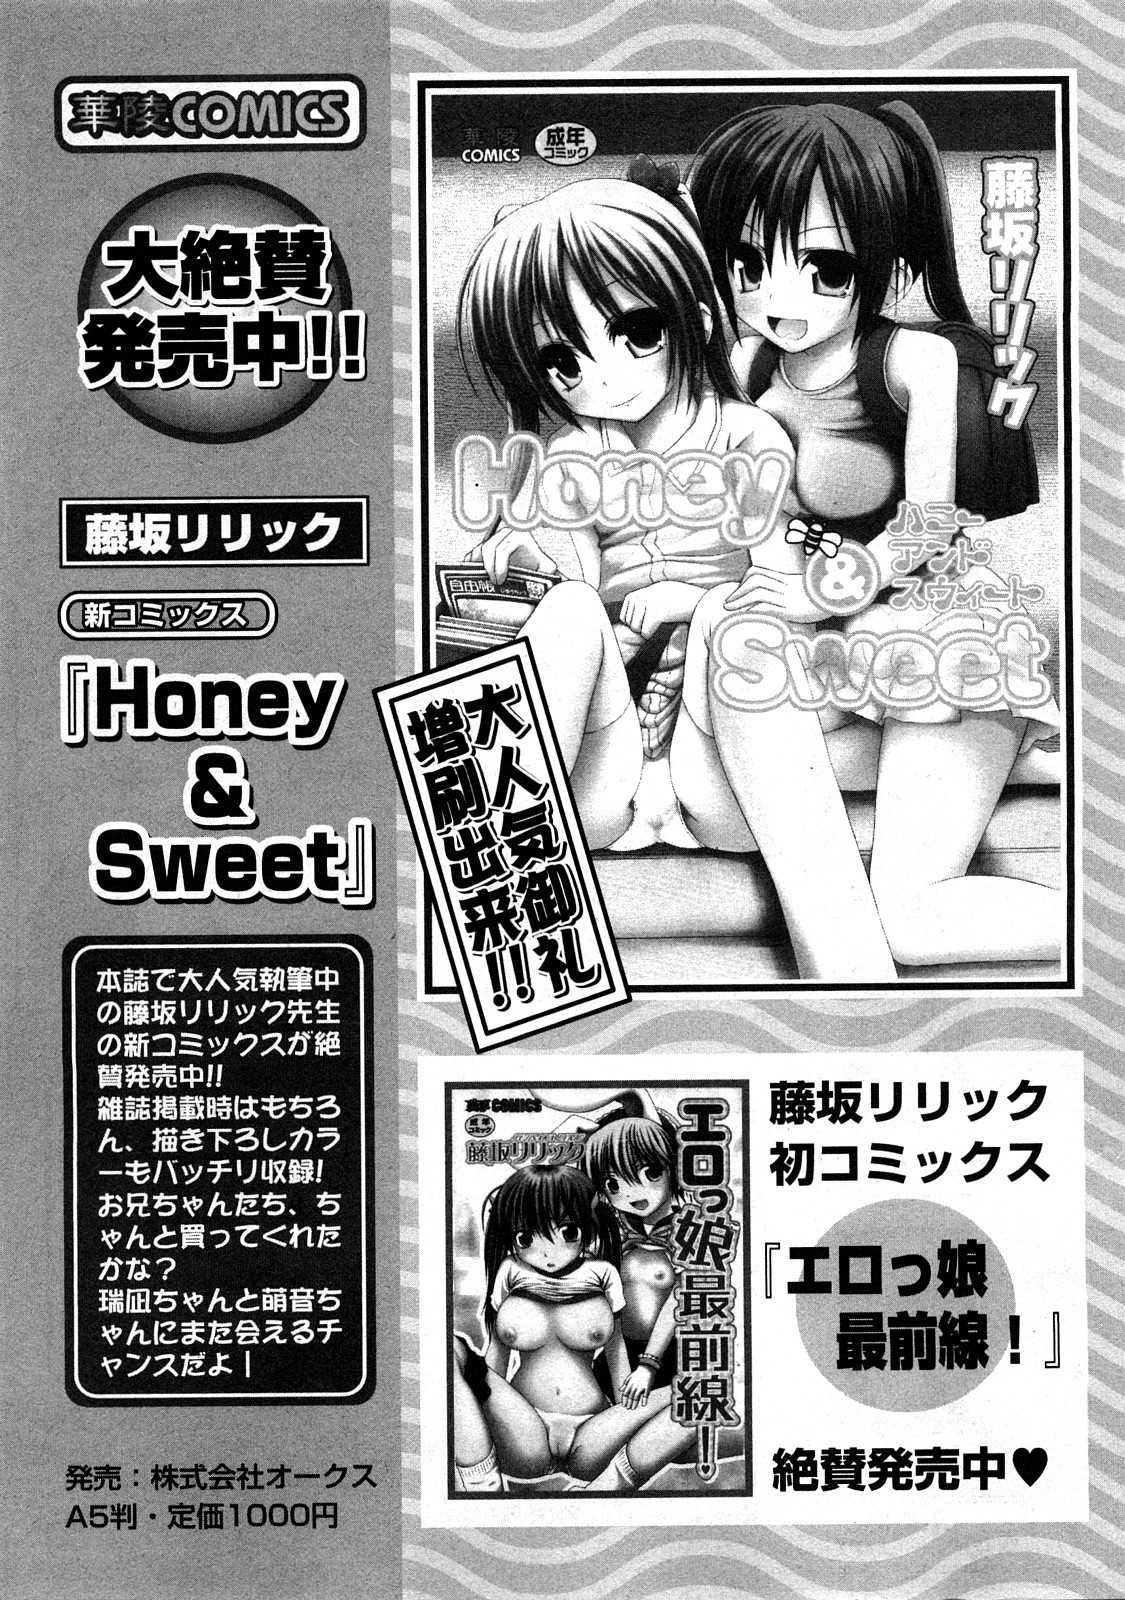 (Adult Manga) [Magazine] Ran-Oh! vol.3 